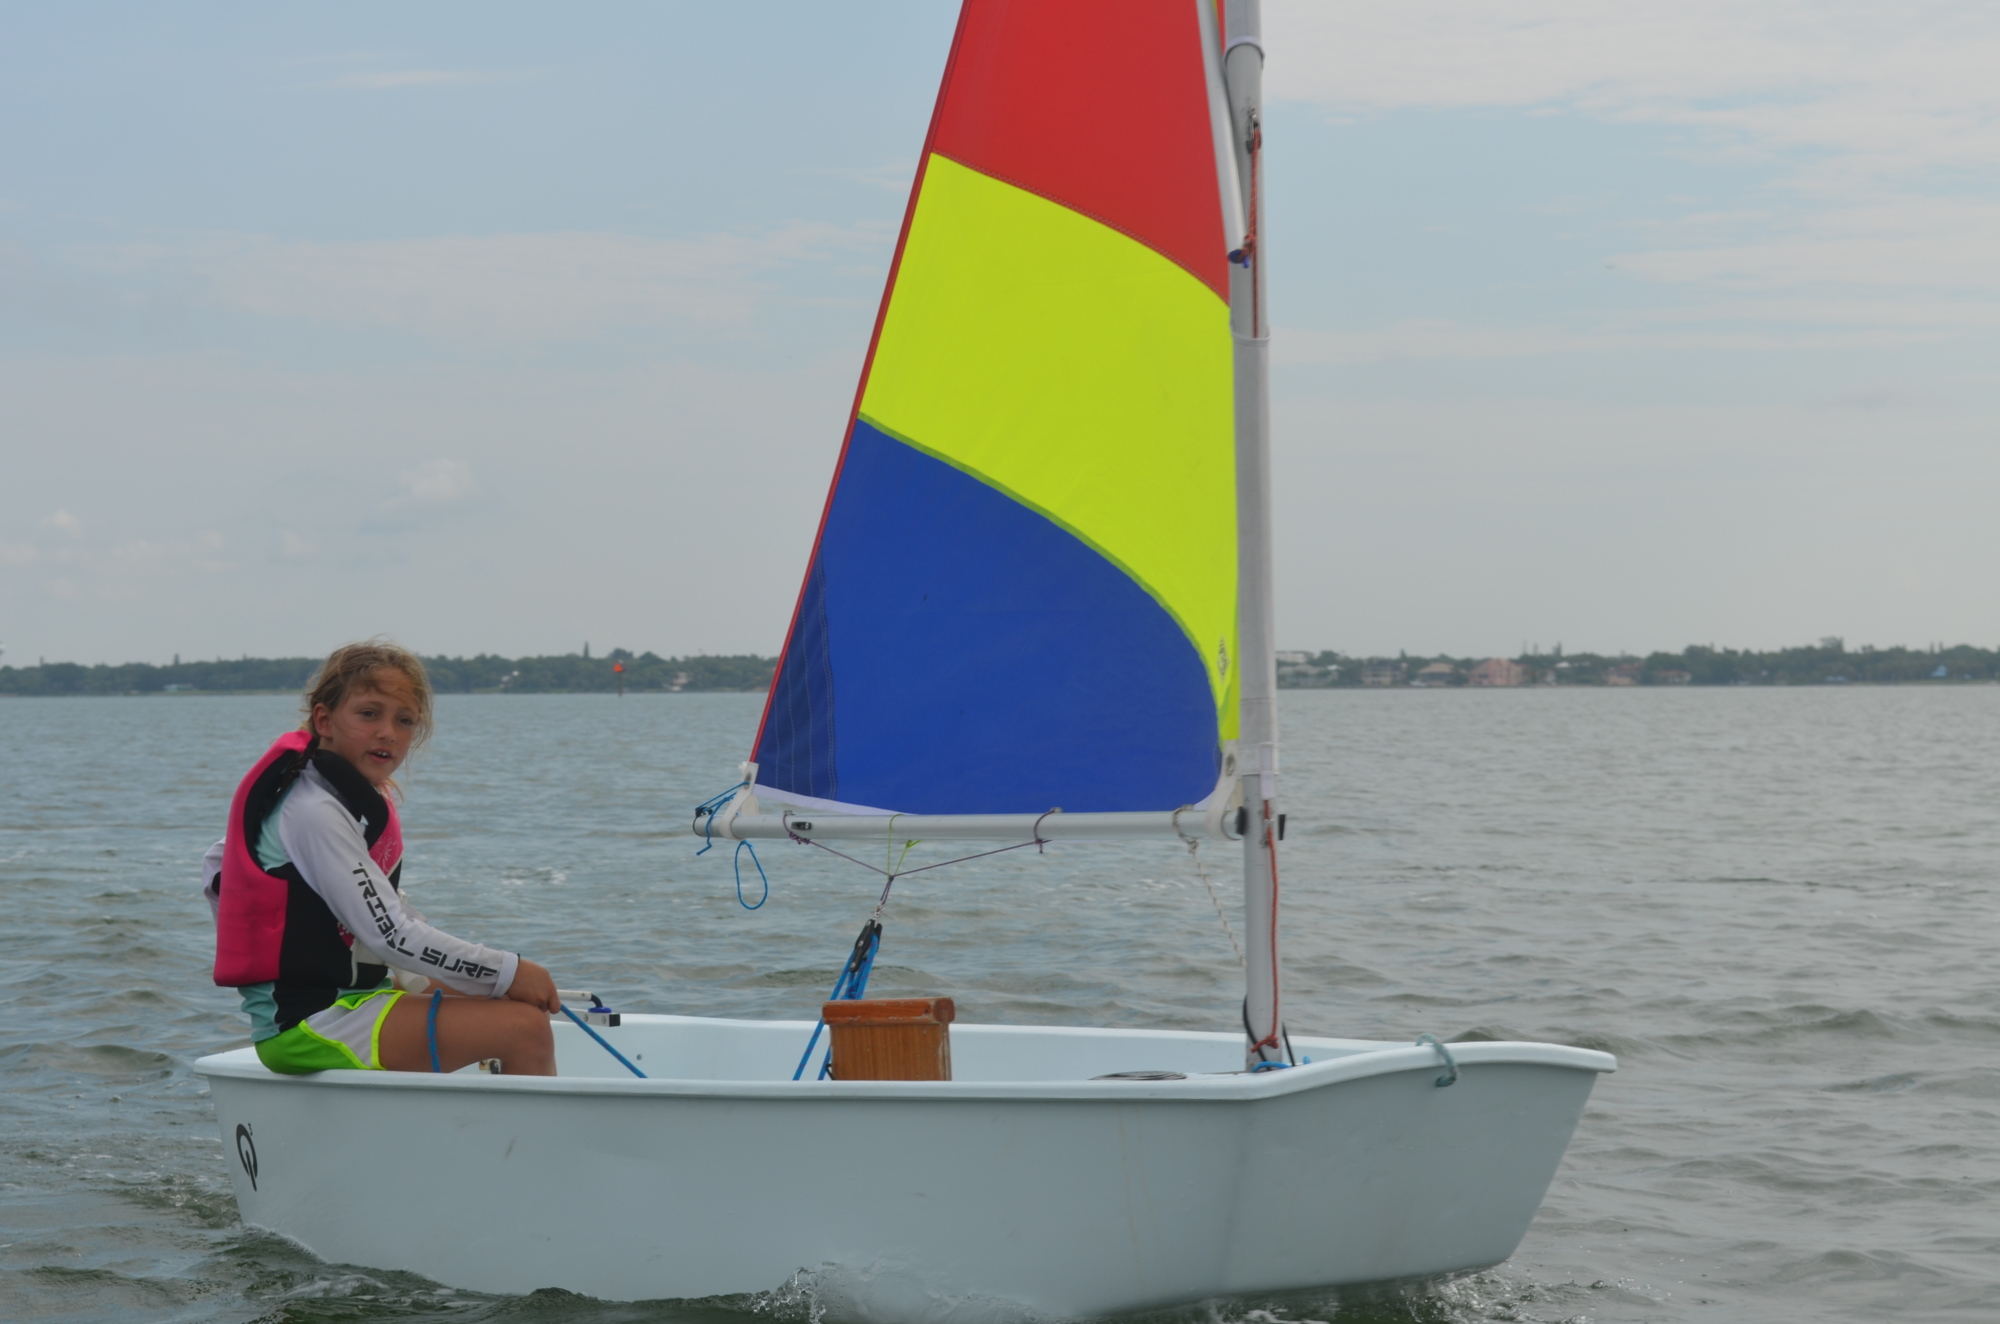 Teagan Munce, 7, at last year's Sarasota Youth Sailing Program summer camp.